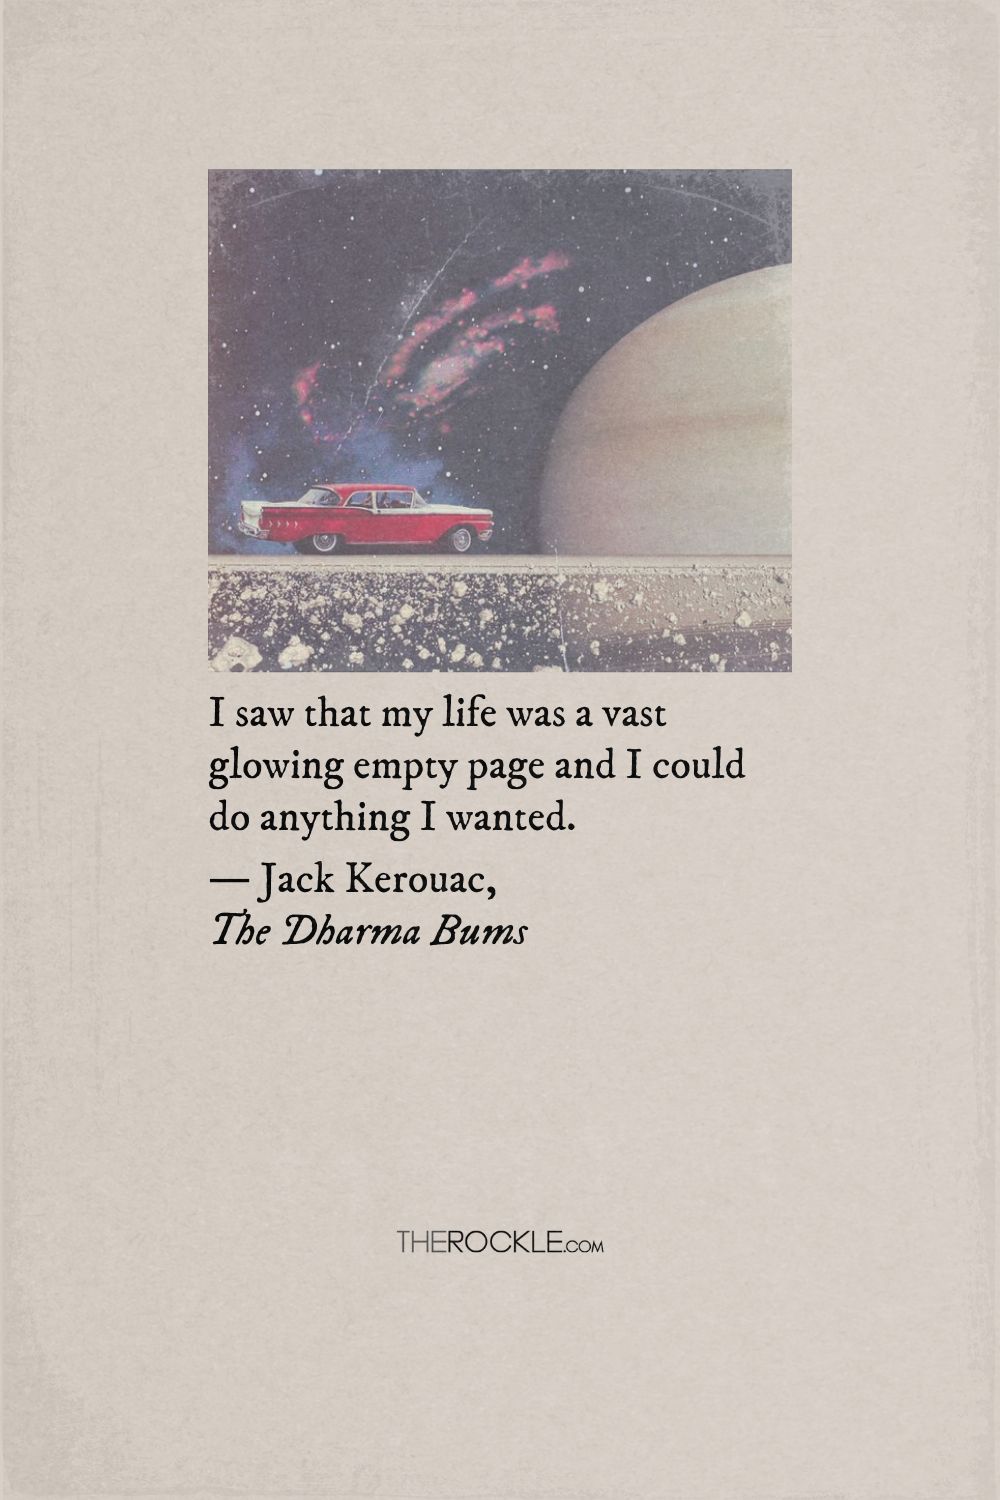 Jack Kerouac on endless life possibilities